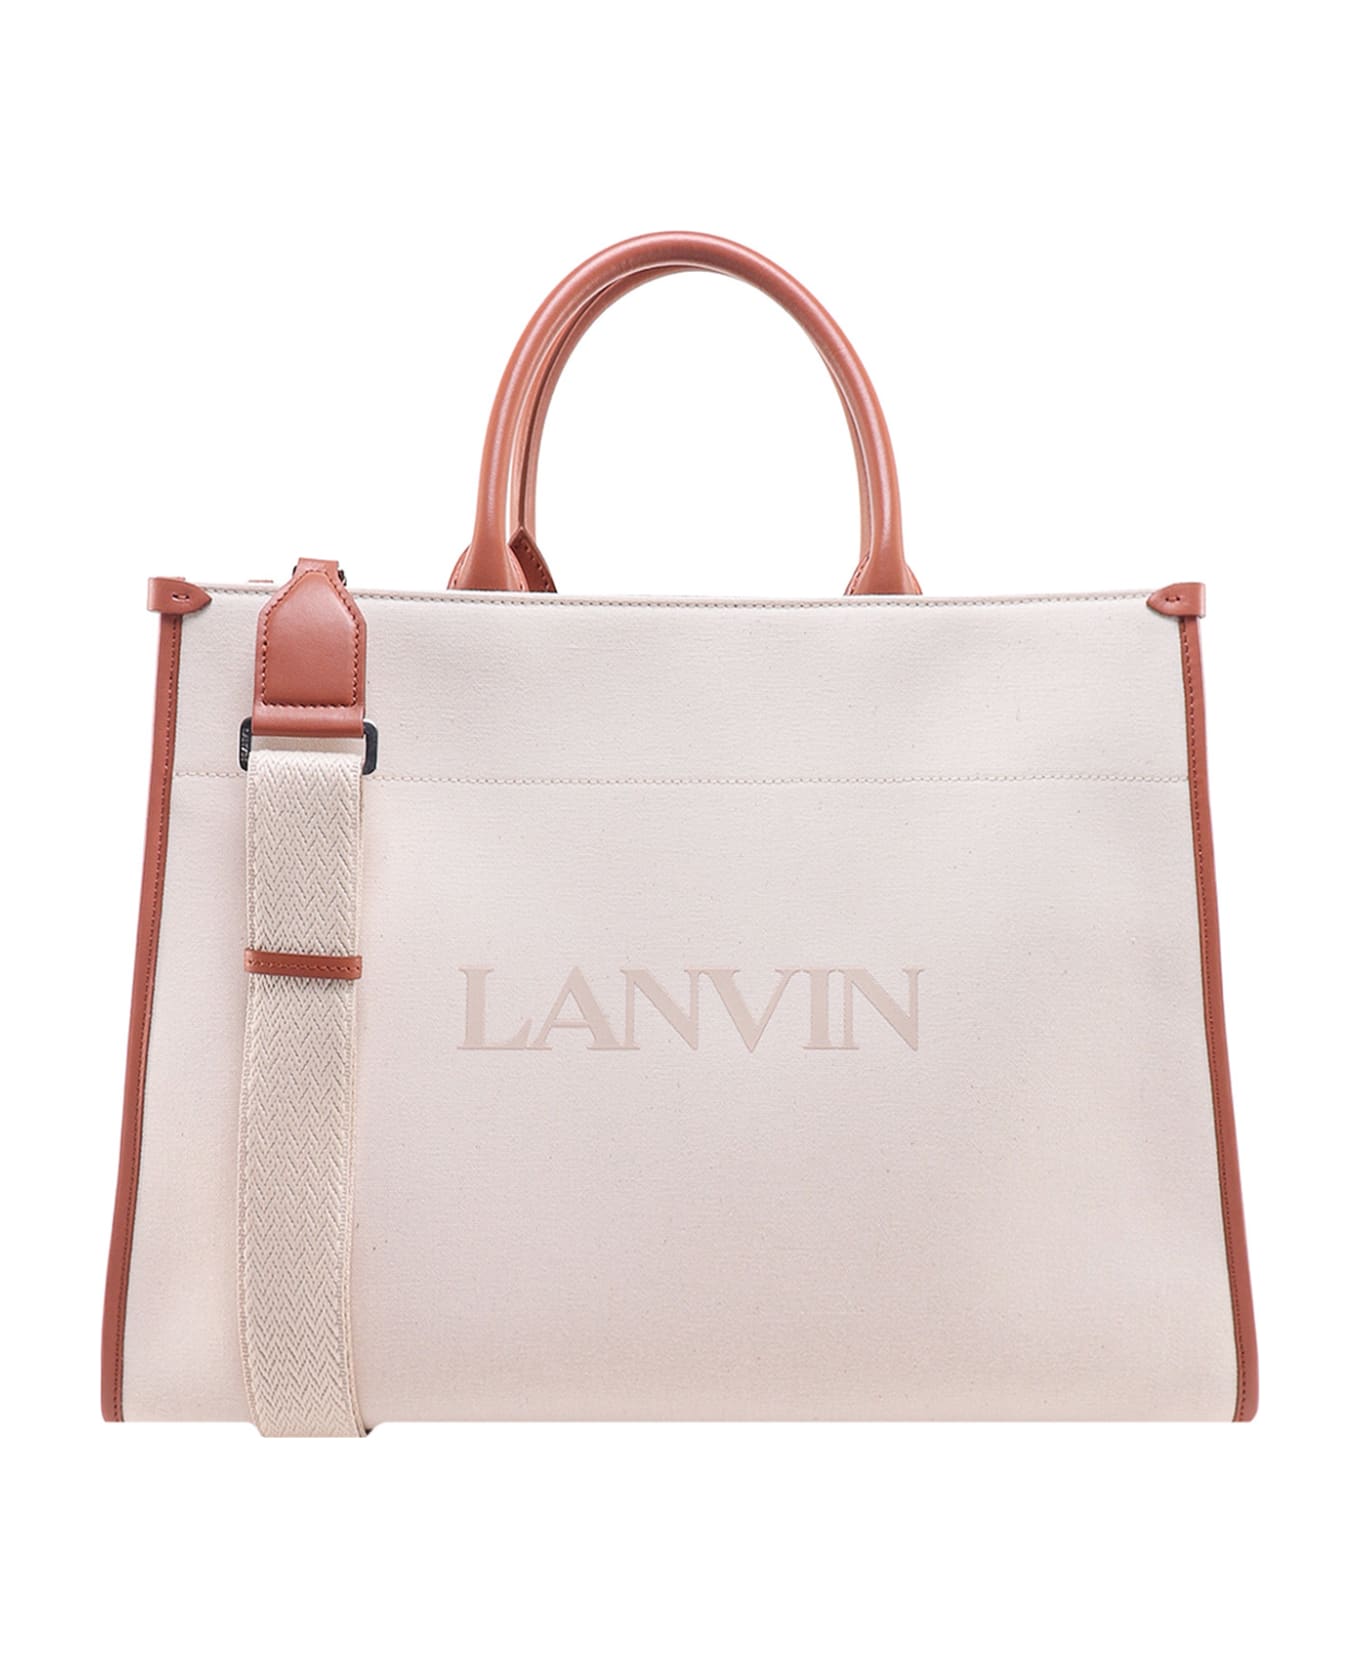 Lanvin Handbag - Beige トートバッグ